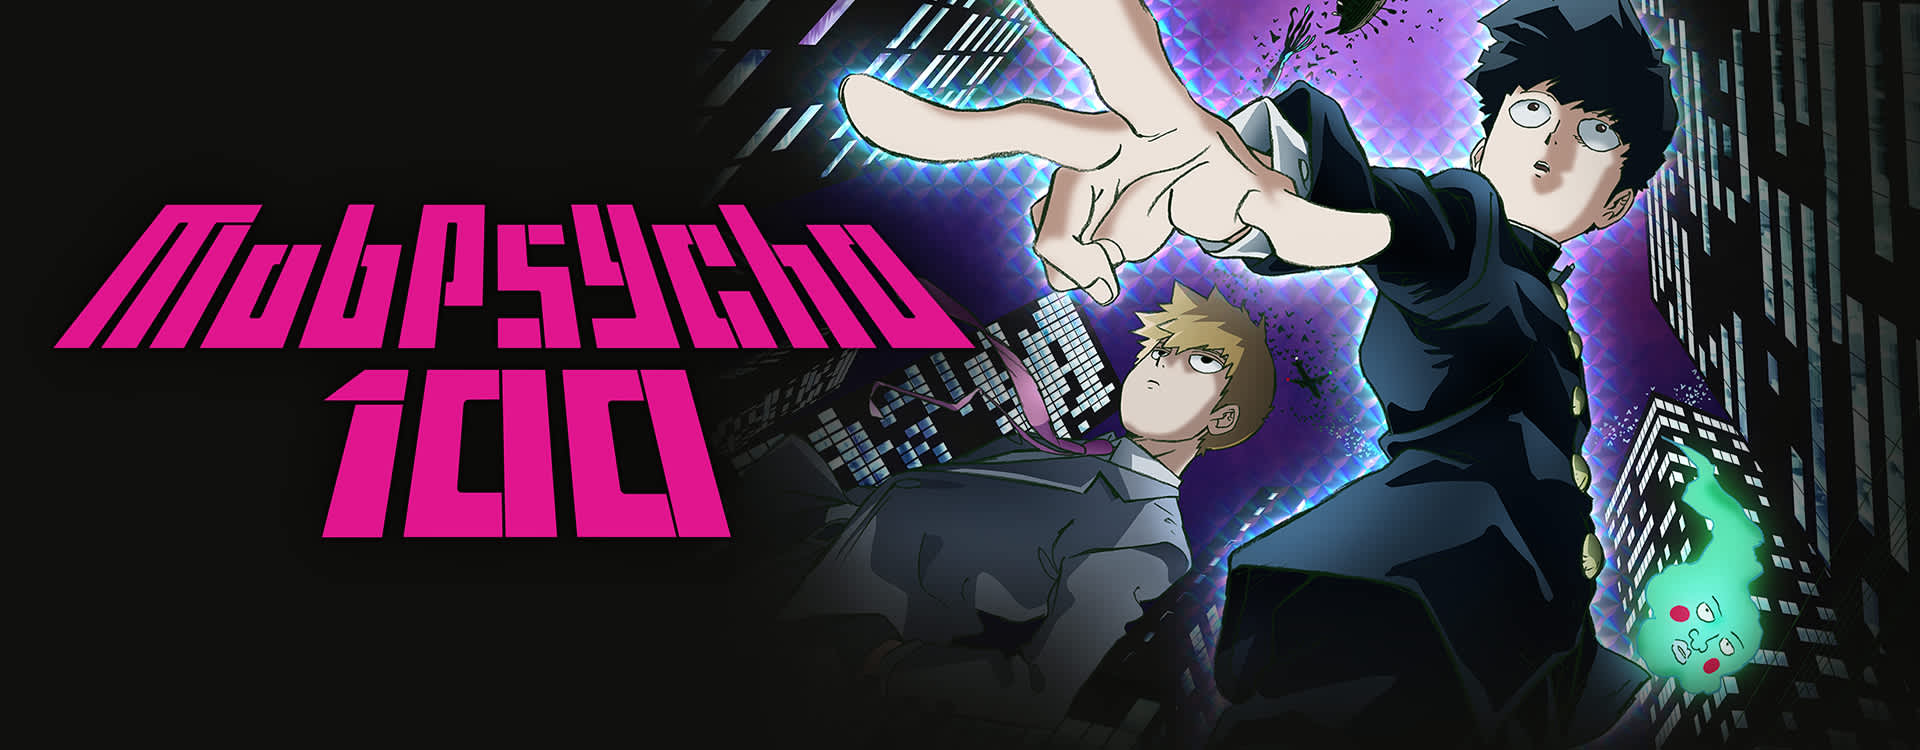 Mob Psycho 100 Spin-off Manga 'Reigen' Announced 